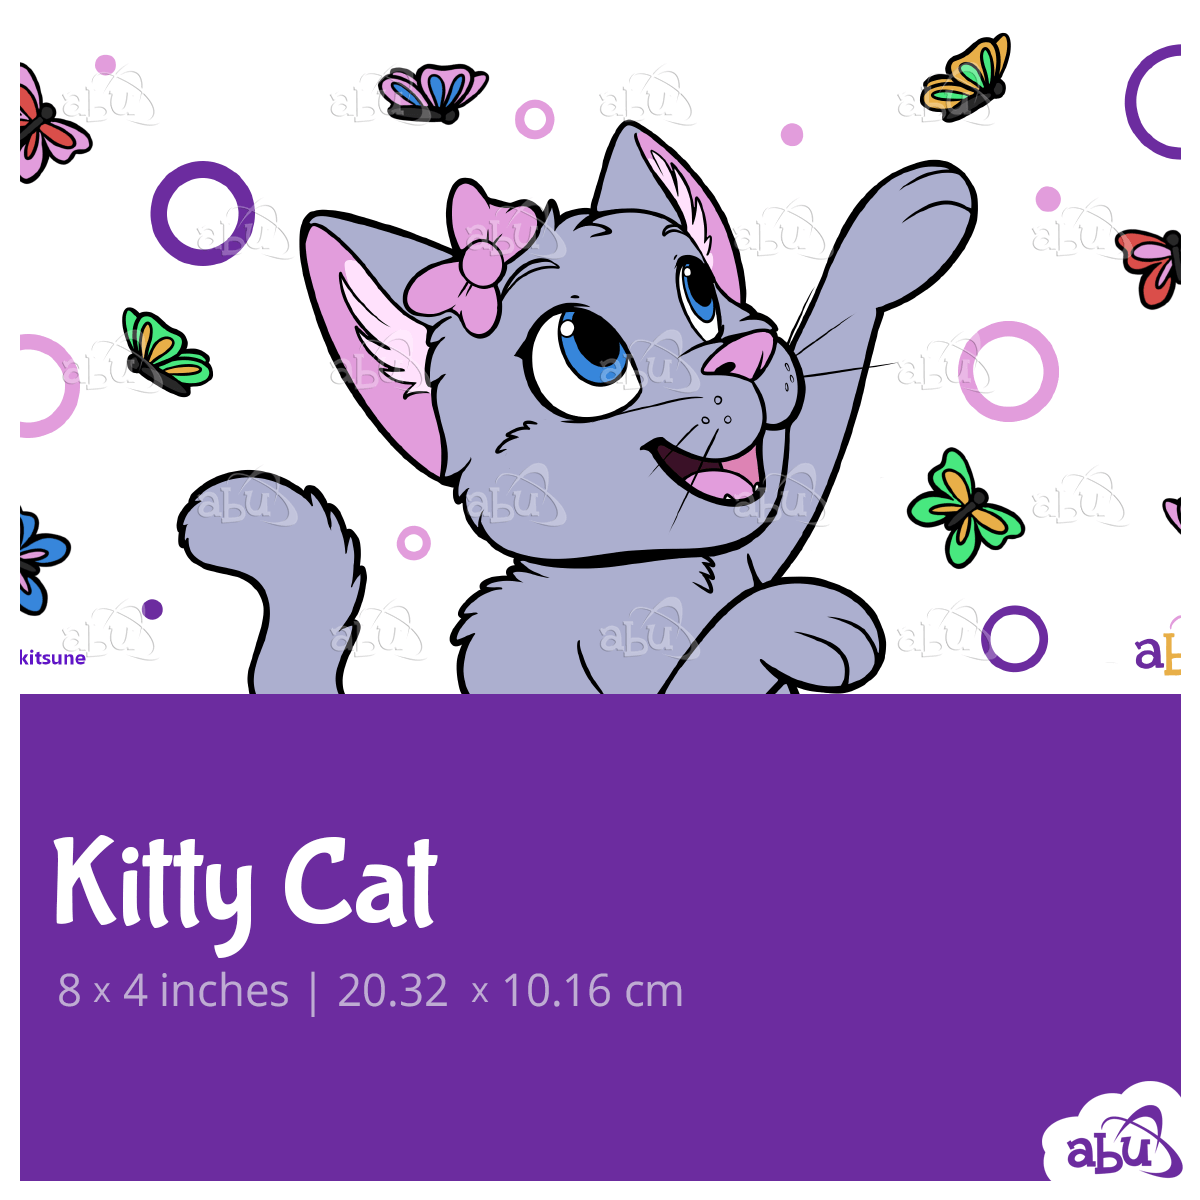 Kitty Cat - ABUniverse Europe